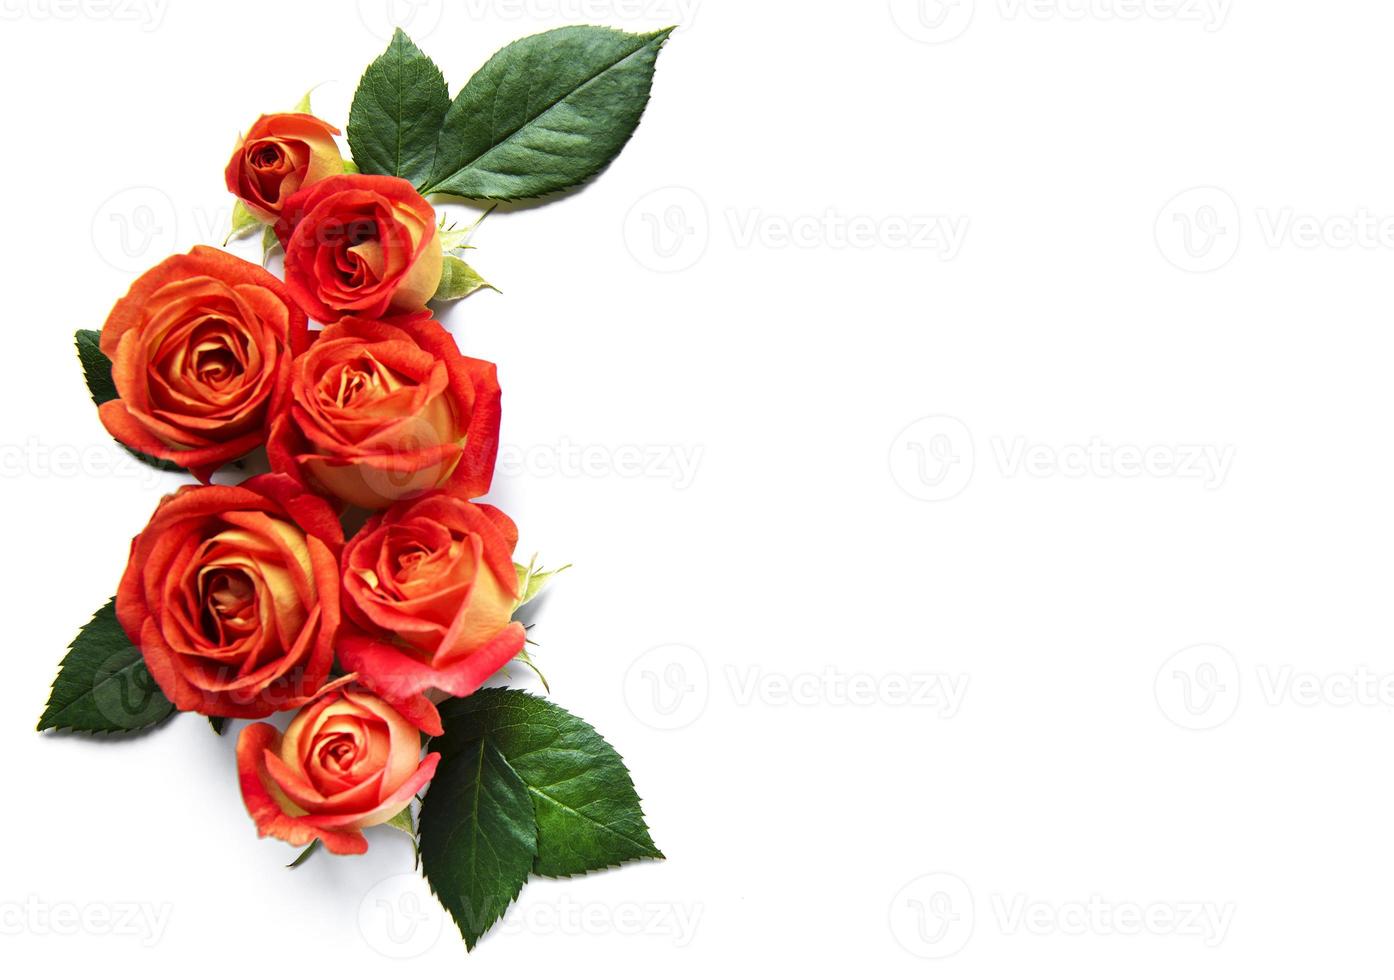 bloemen samenstelling. frame gemaakt van rode rozen foto